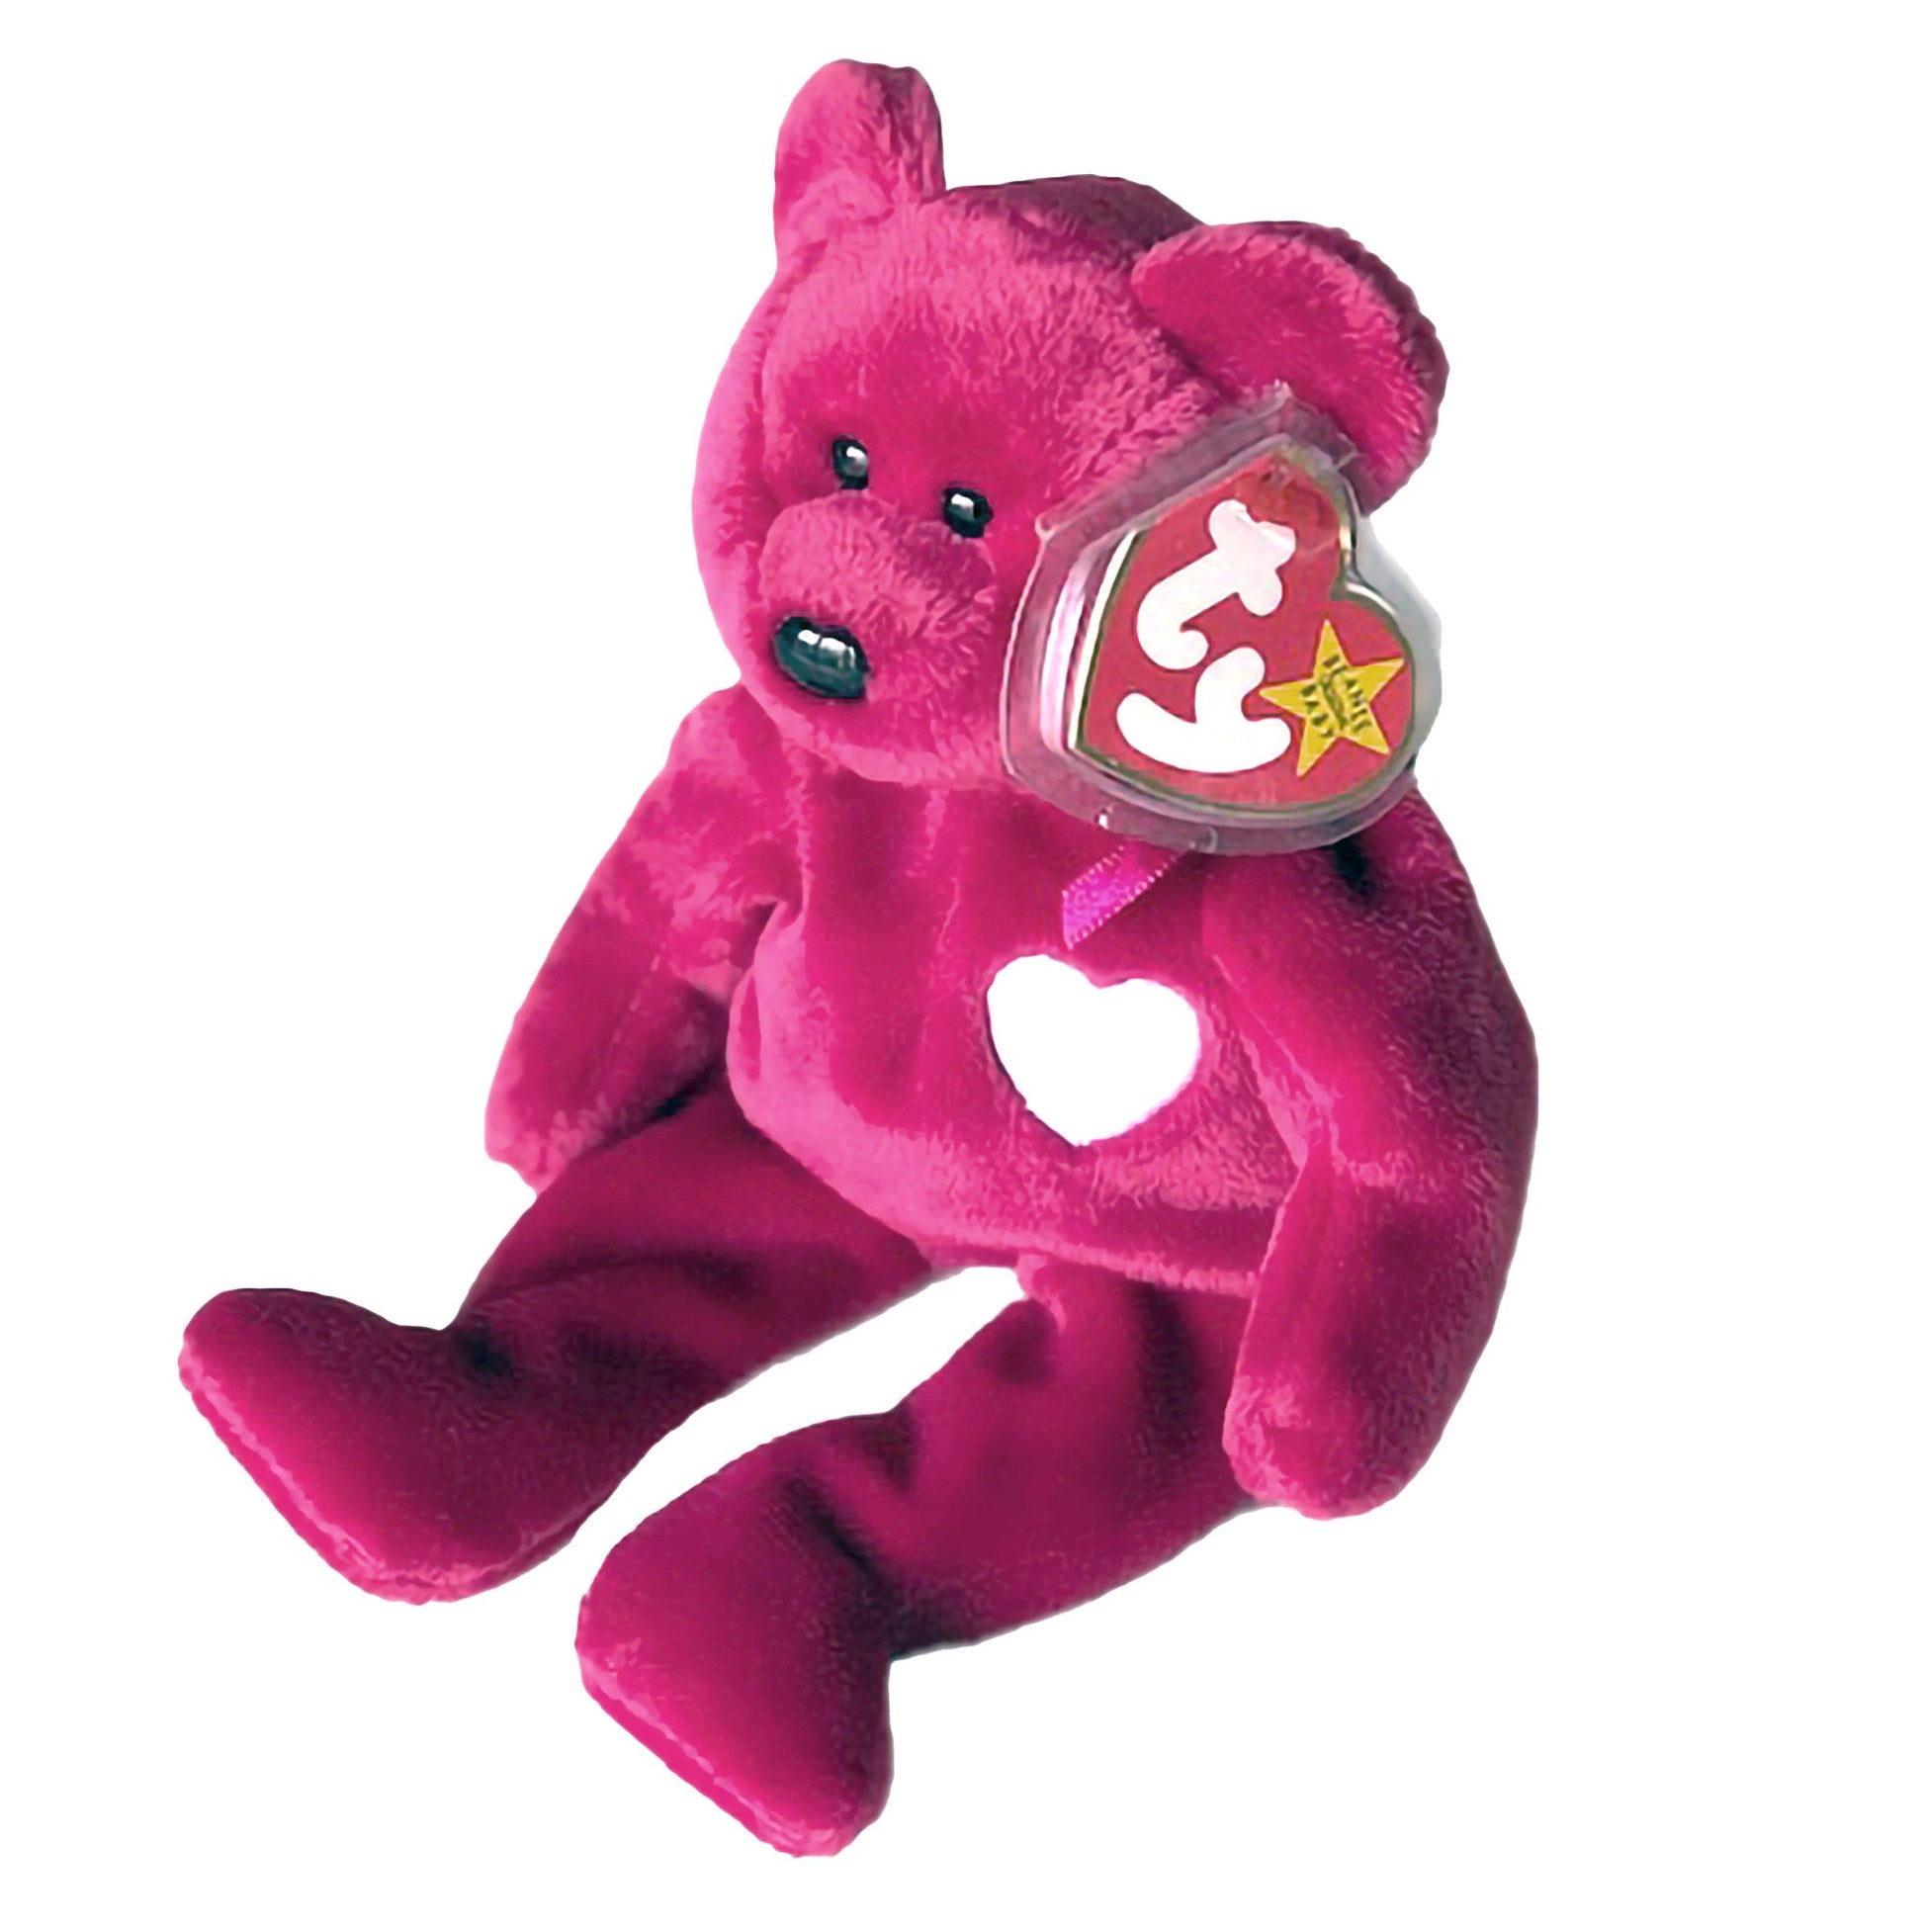 1998 TY VALENTINA Pink Original Beanie Baby Stuffed Bear Doll Toy 